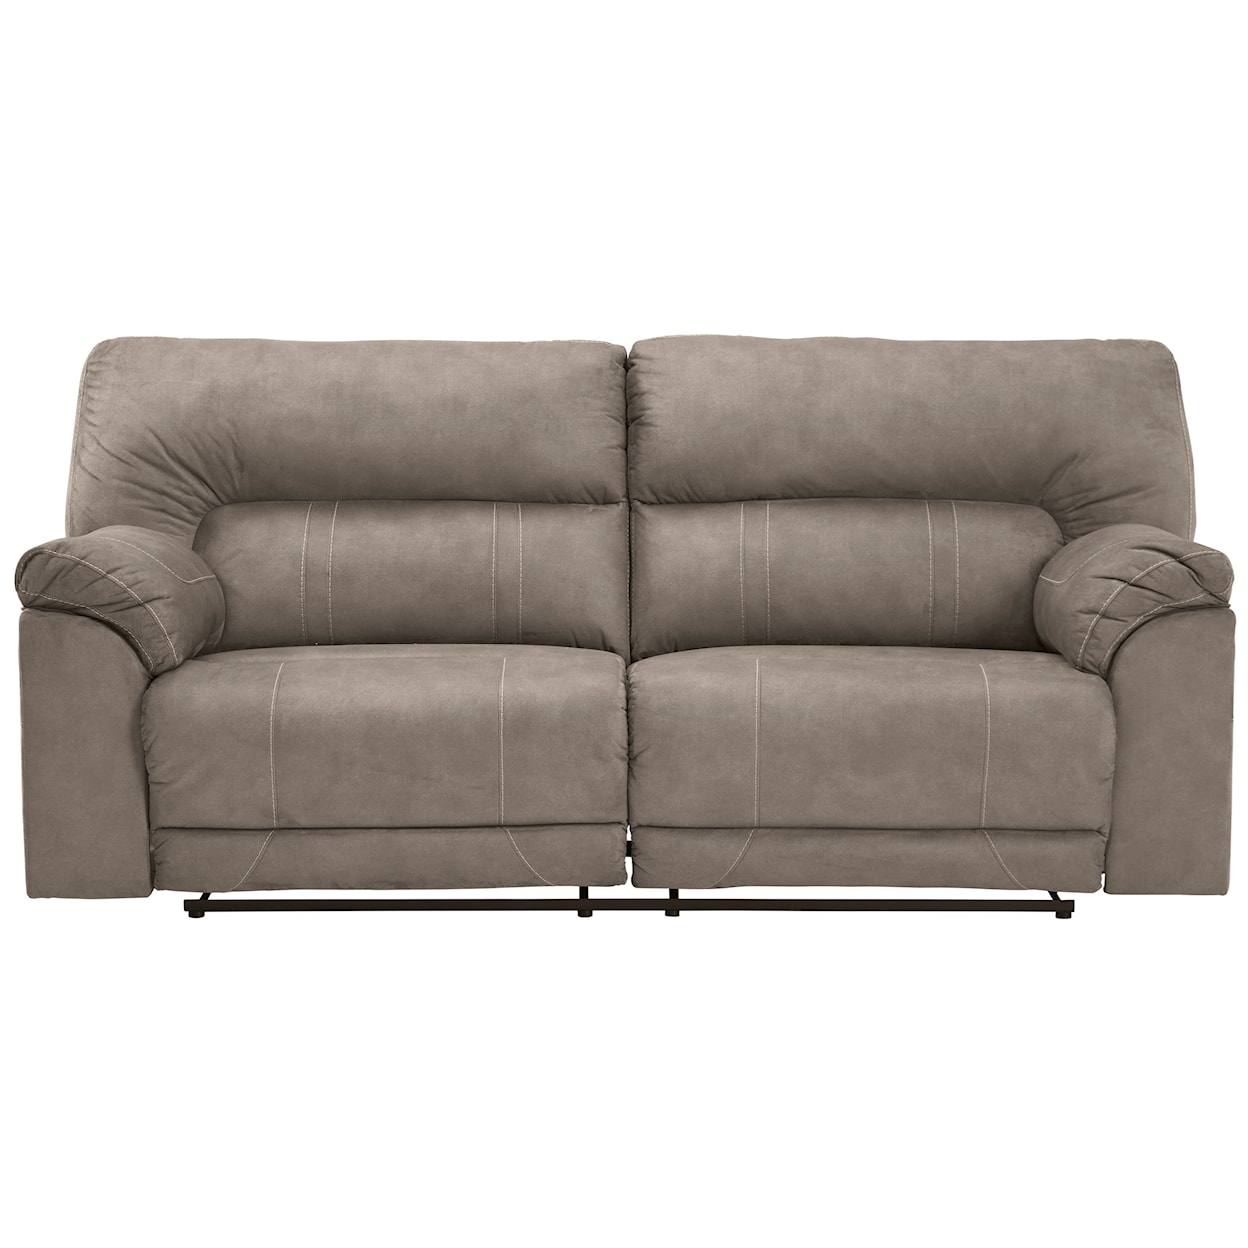 Benchcraft Cavalcade Two-Seat Reclining Sofa